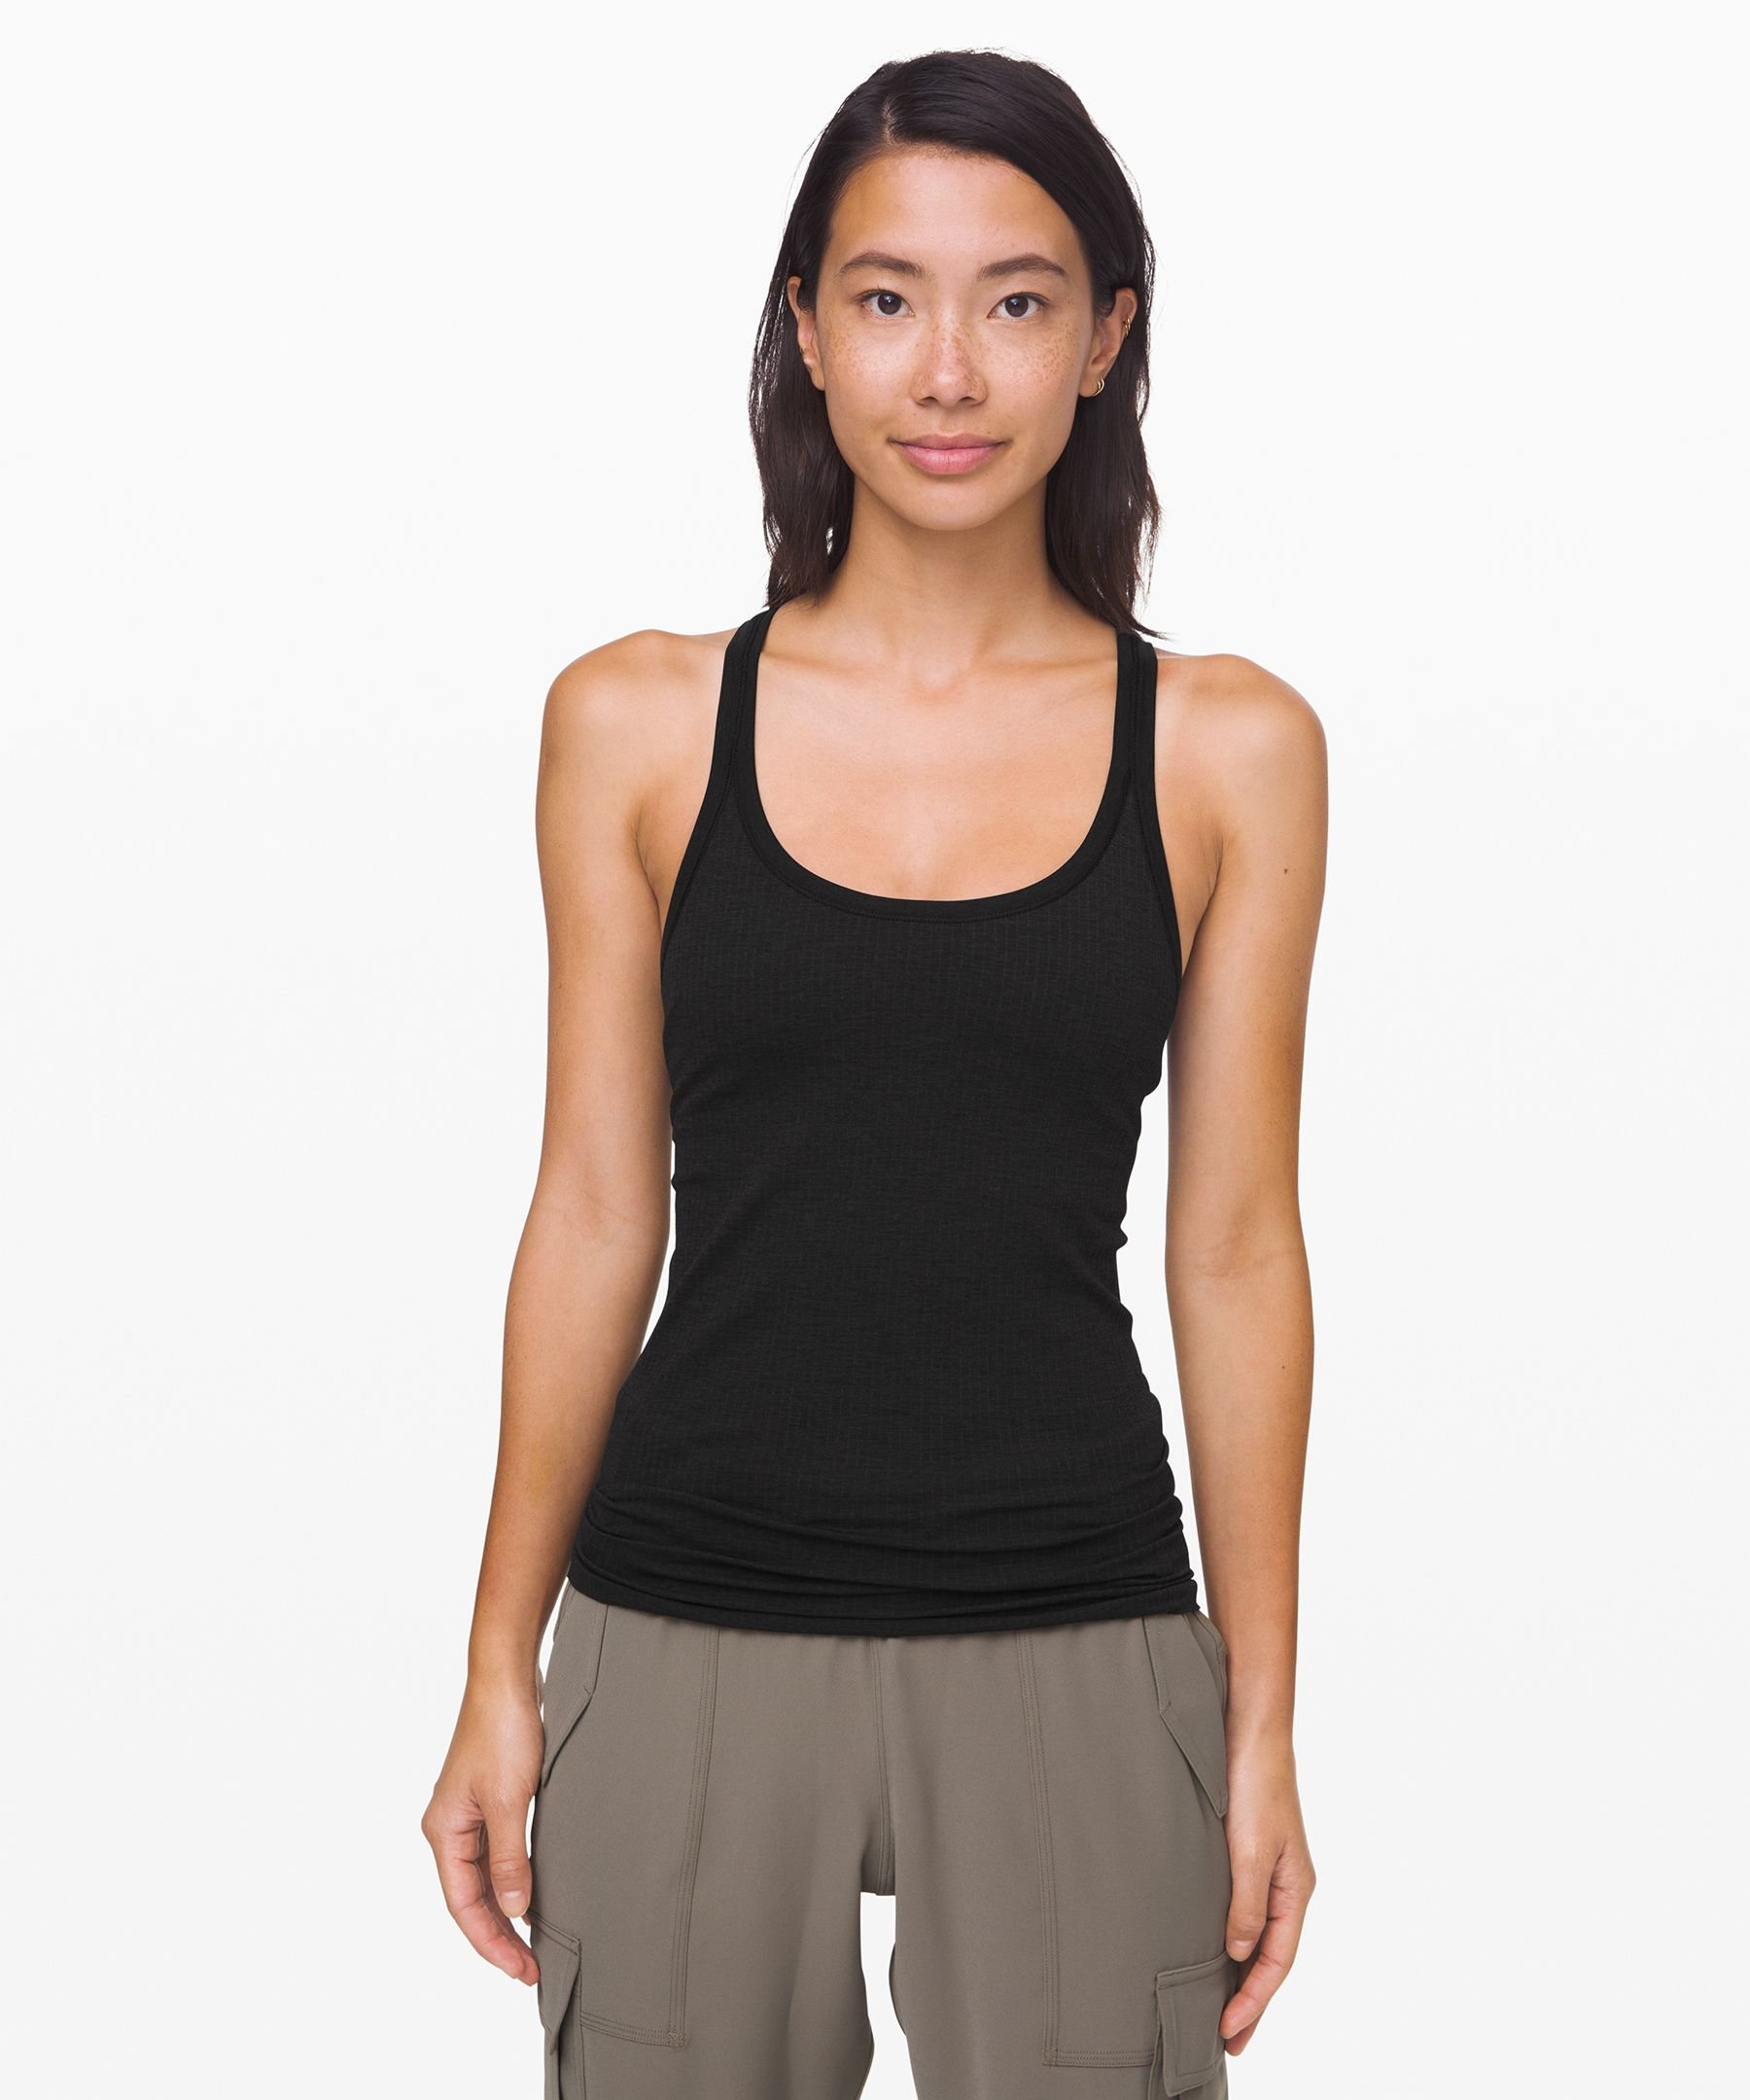 DYZD Womens Workout Tank Tops Elastic Sleeveless Sweatshirt Fitness Shirt 